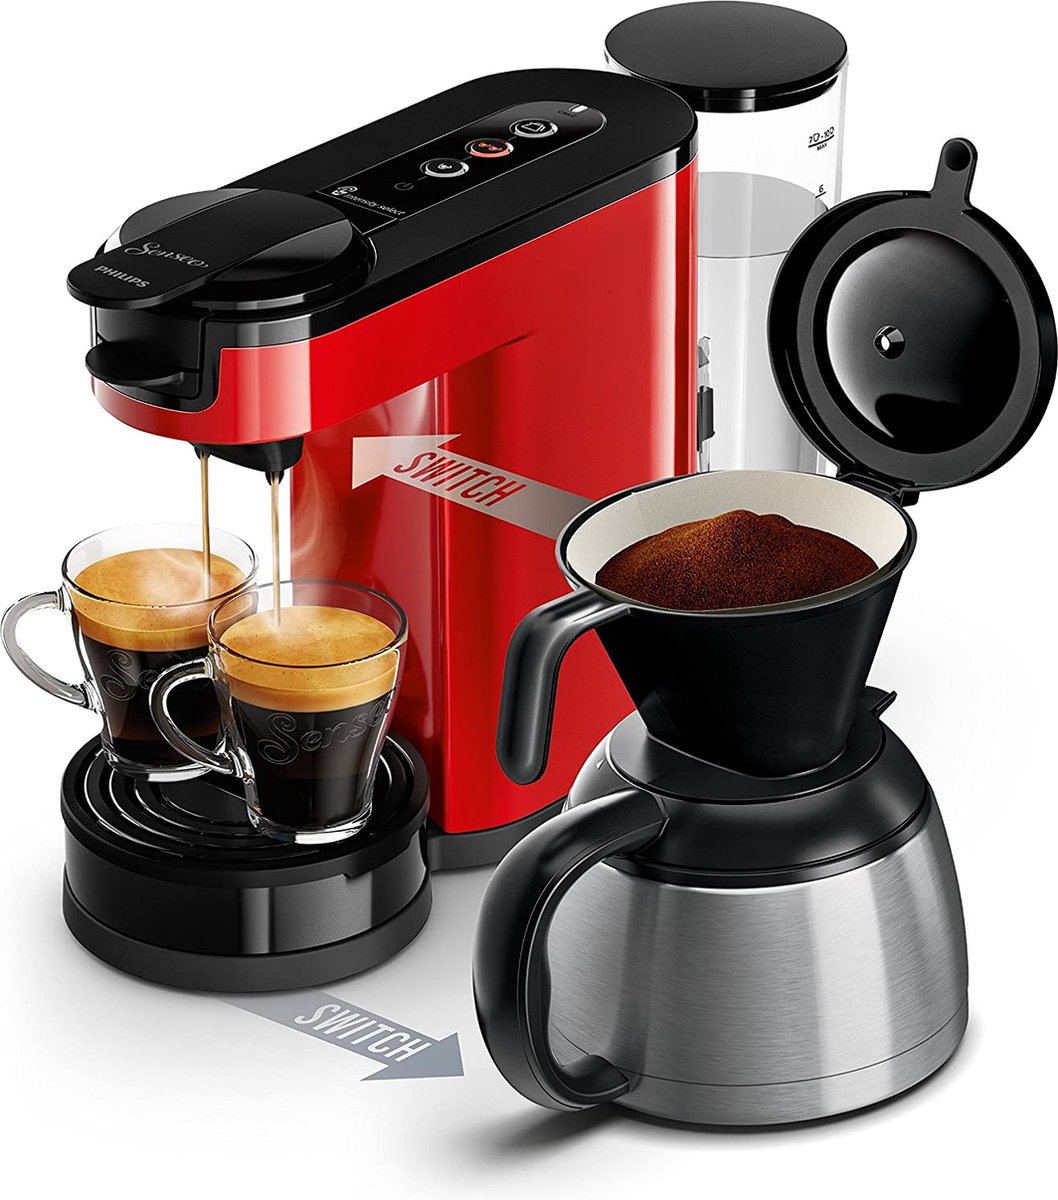 Koffiepadapparaat koffiezetapparaat automatisch professionele kwaliteit